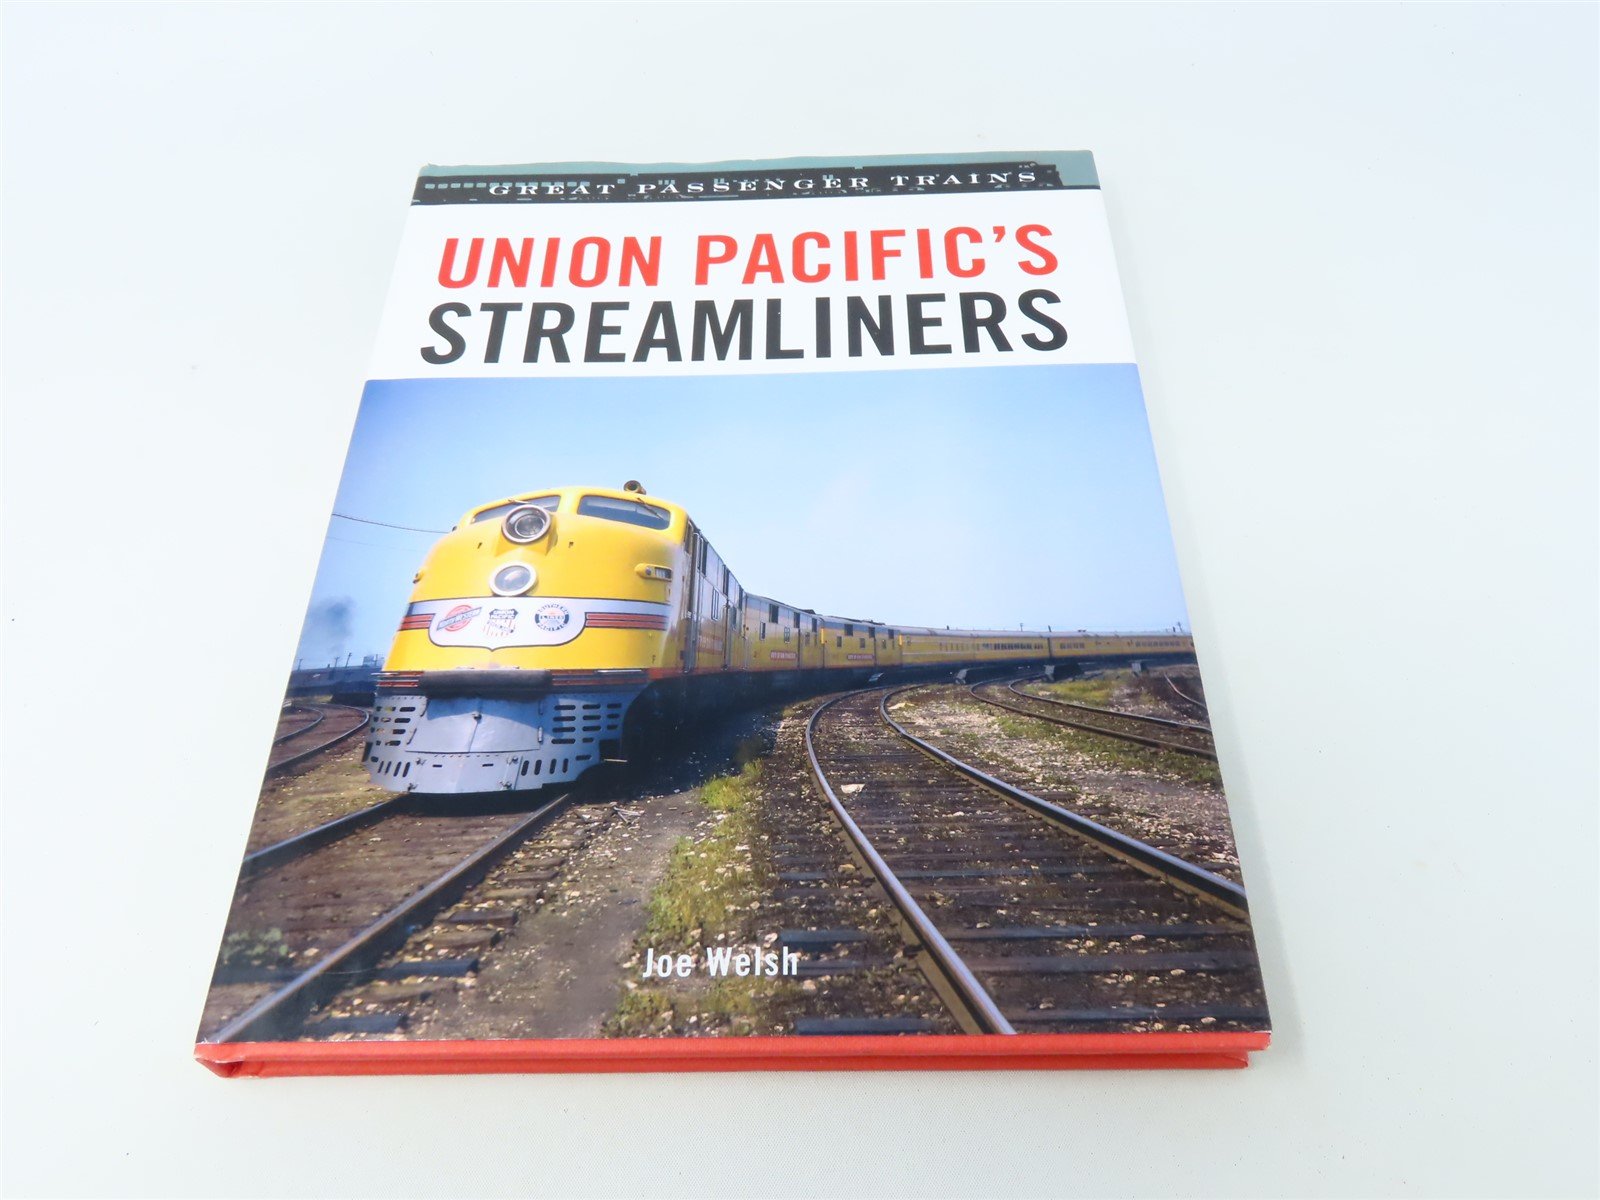 Union Pacific's Streamliners by Joe Welsh ©2008 HC Book